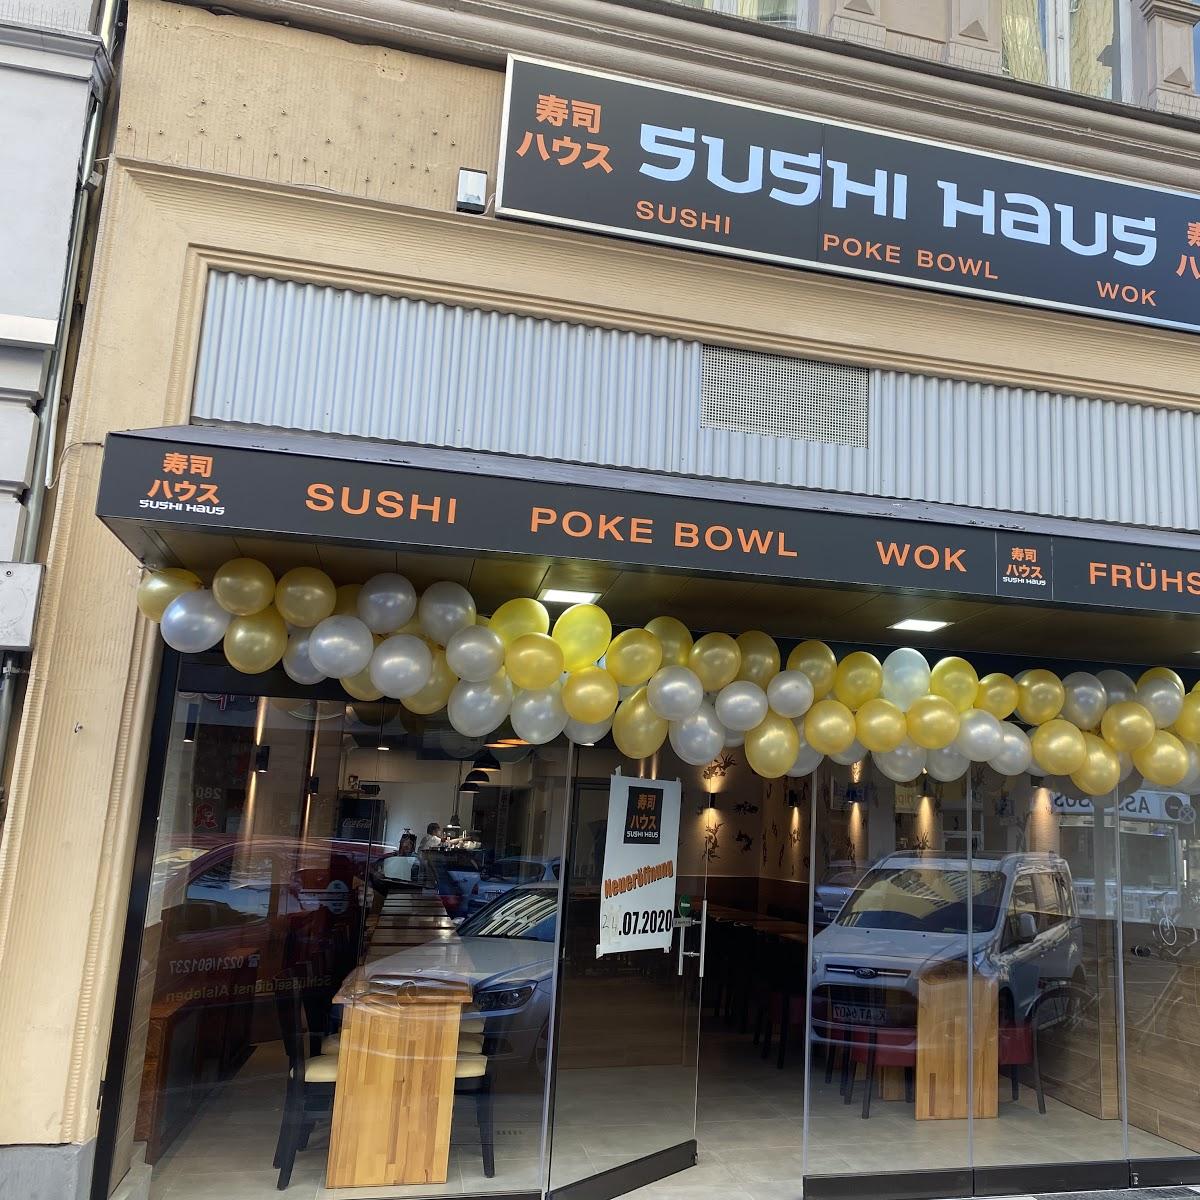 Restaurant "Sushi Haus" in Köln